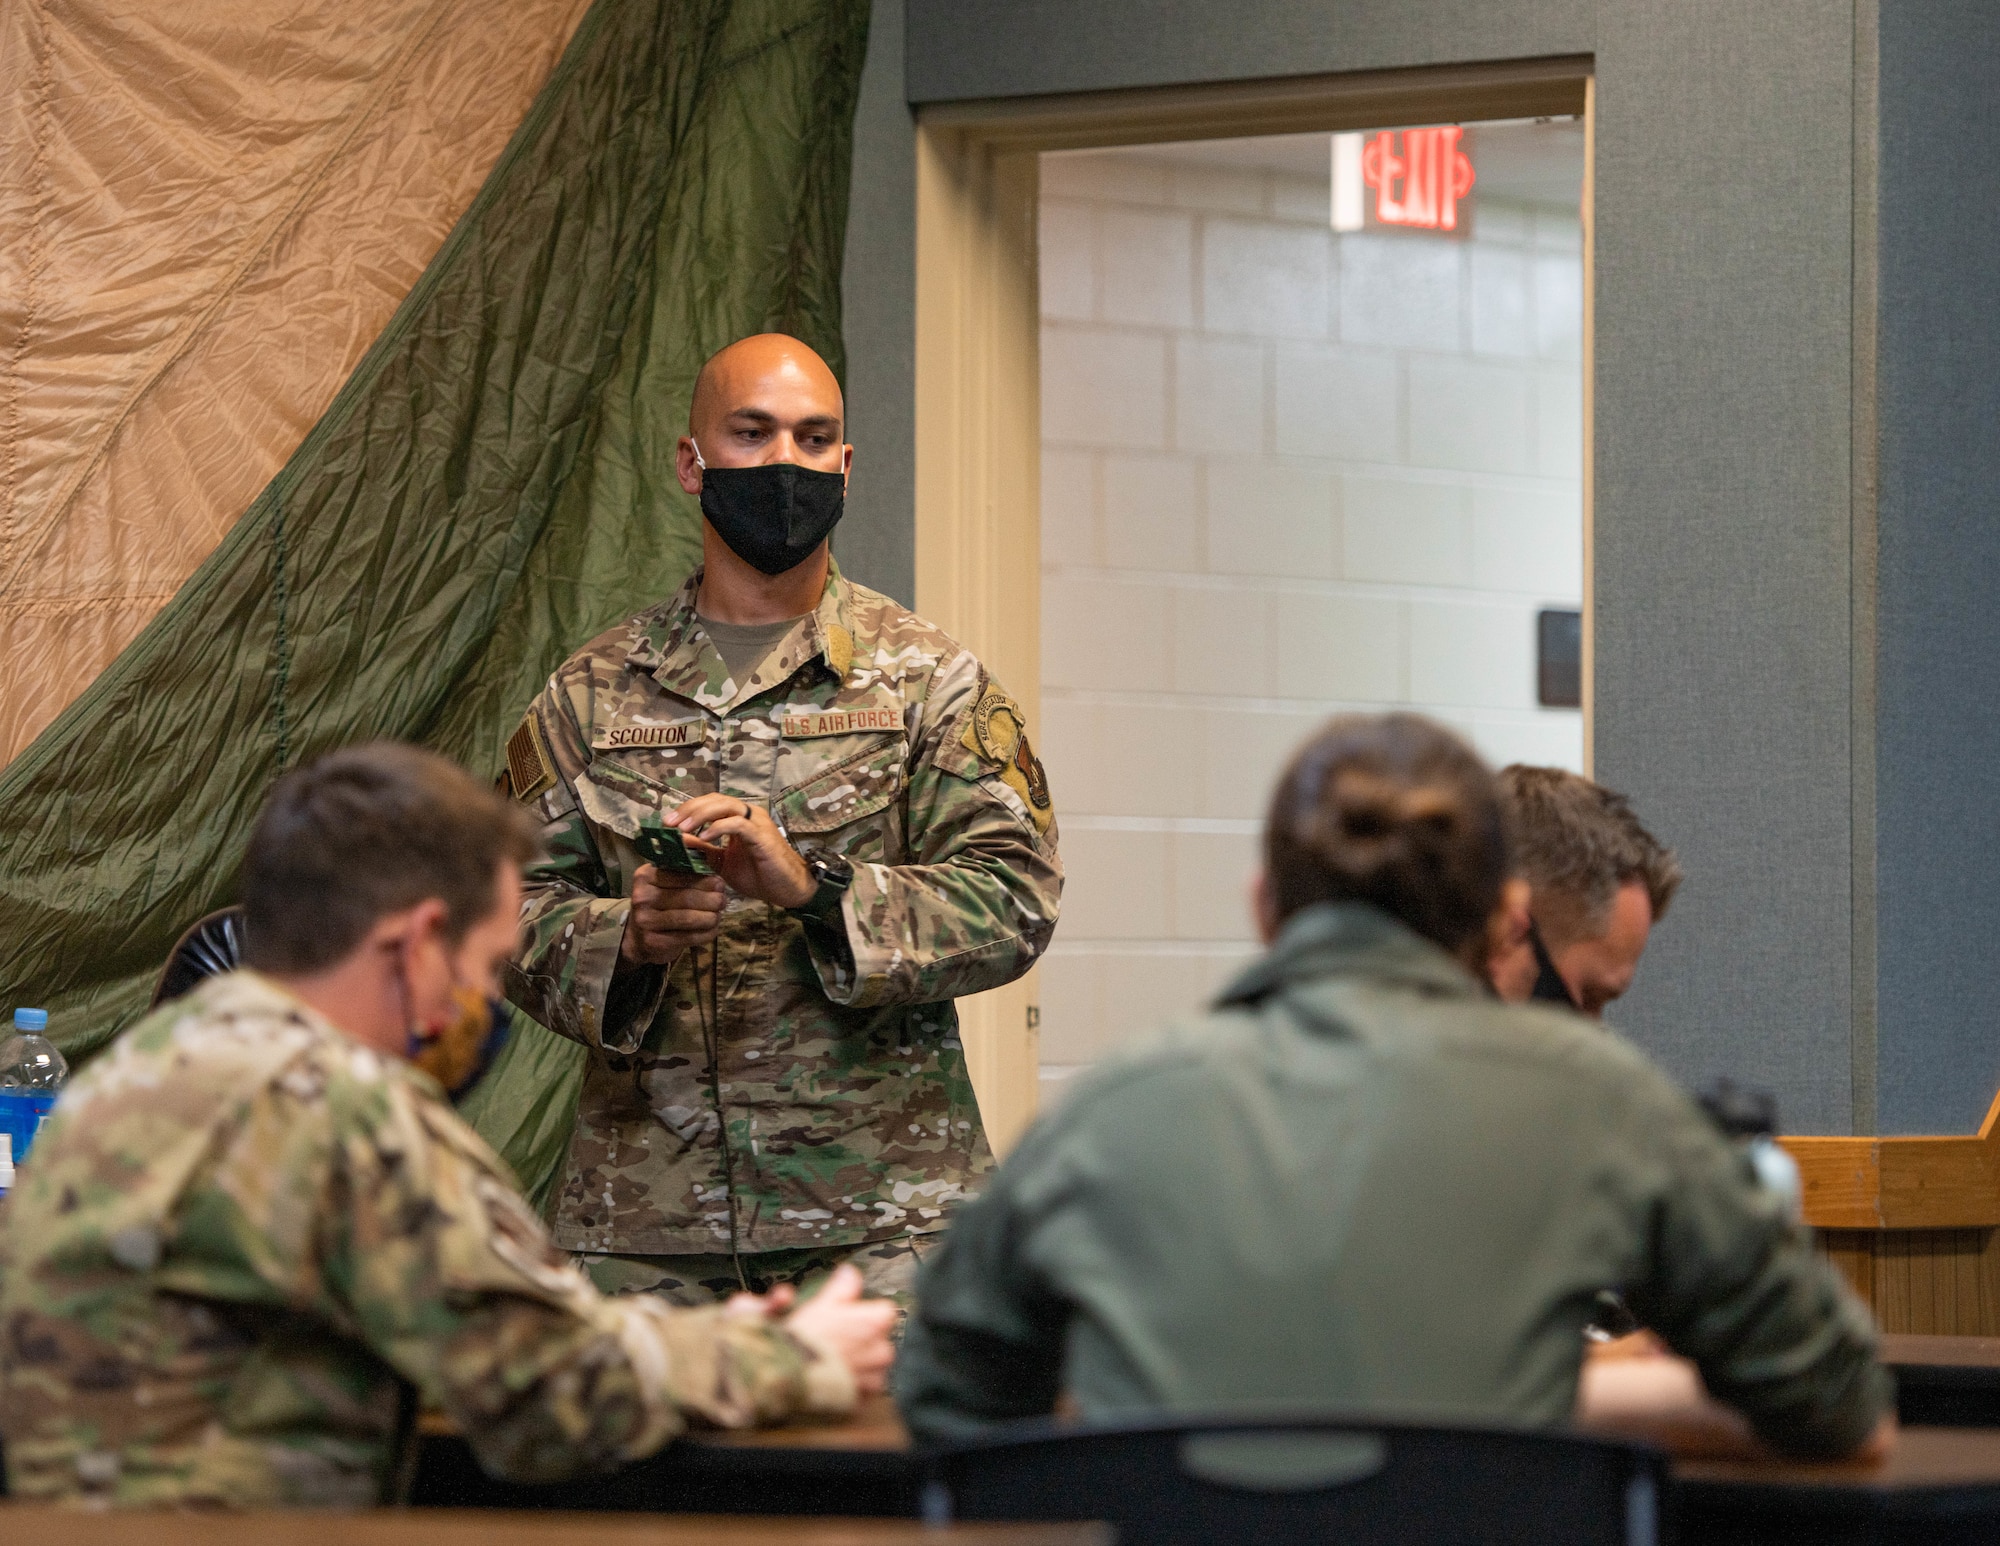 SERE teaches Combat Survival Training course